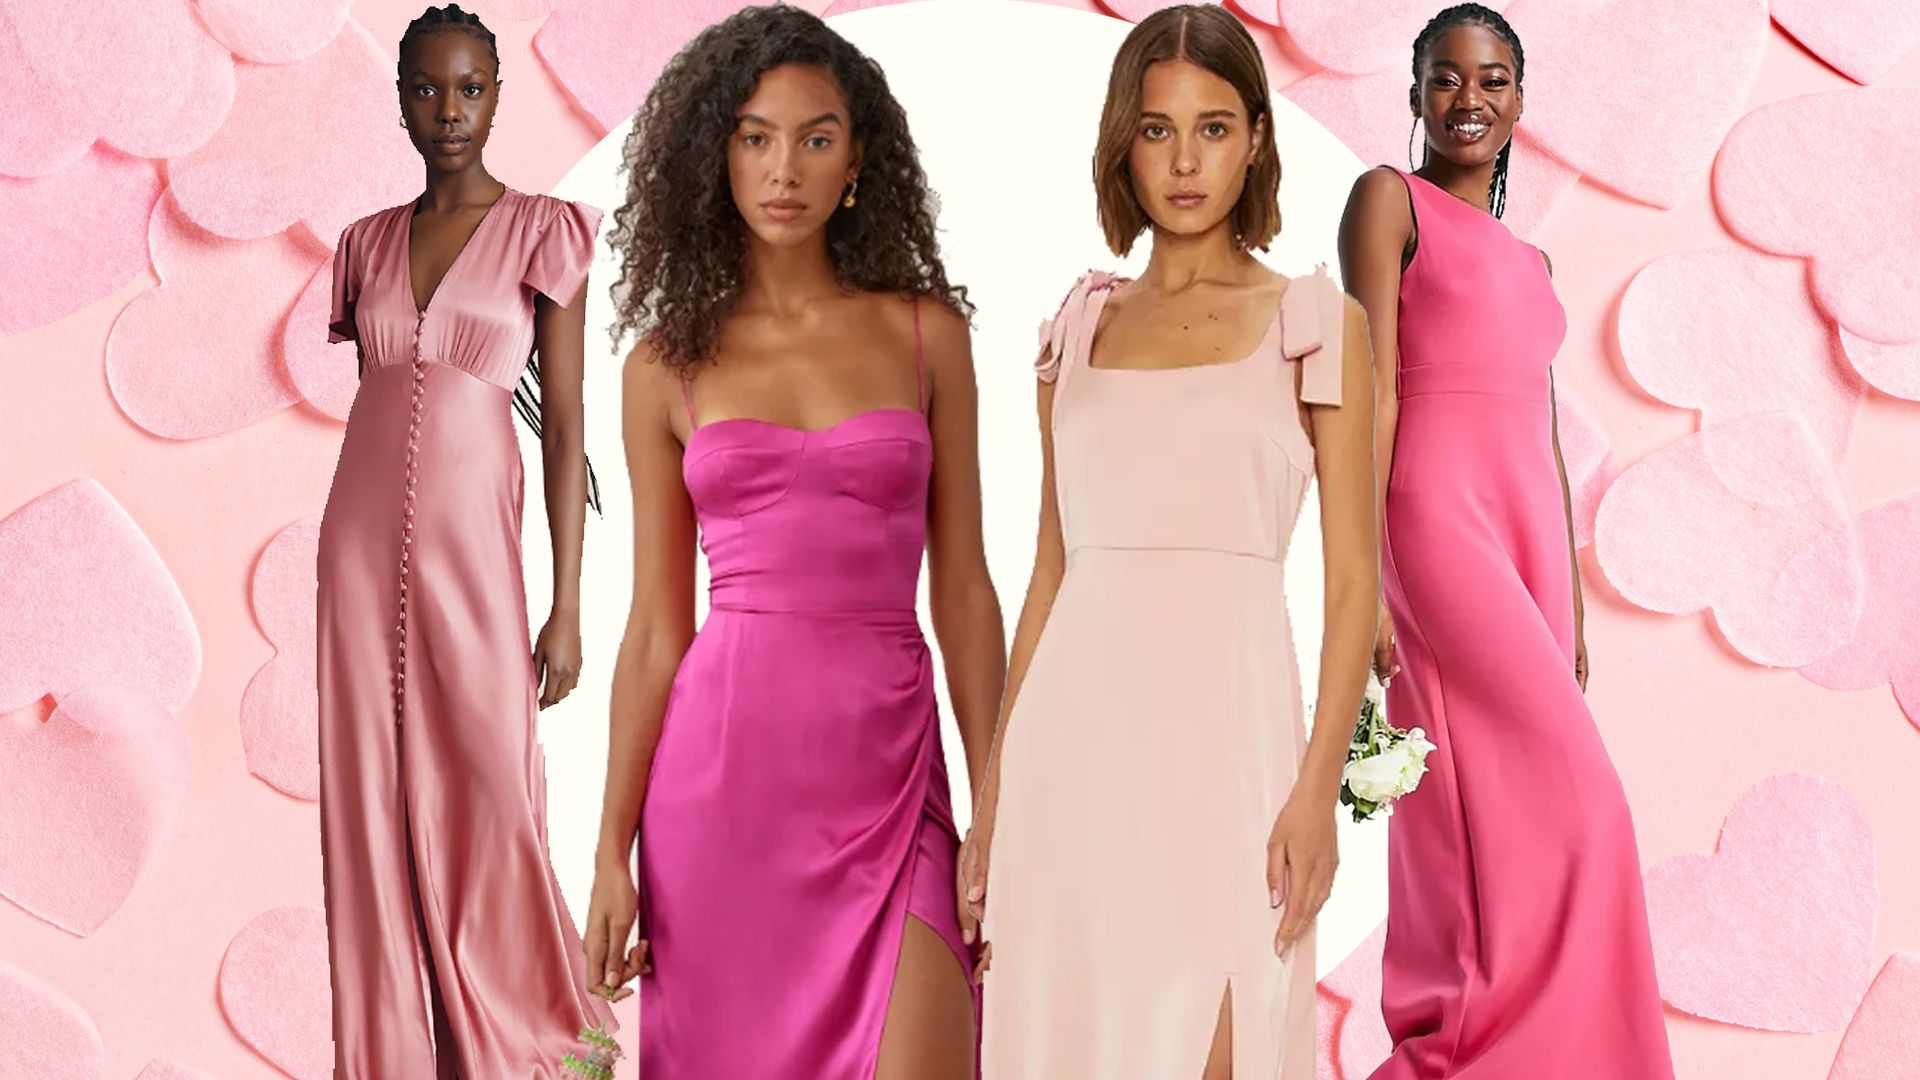 https://images.hellomagazine.com/horizon/landscape/3125f555367c-best-pink-bridesmaid-dresses.jpg